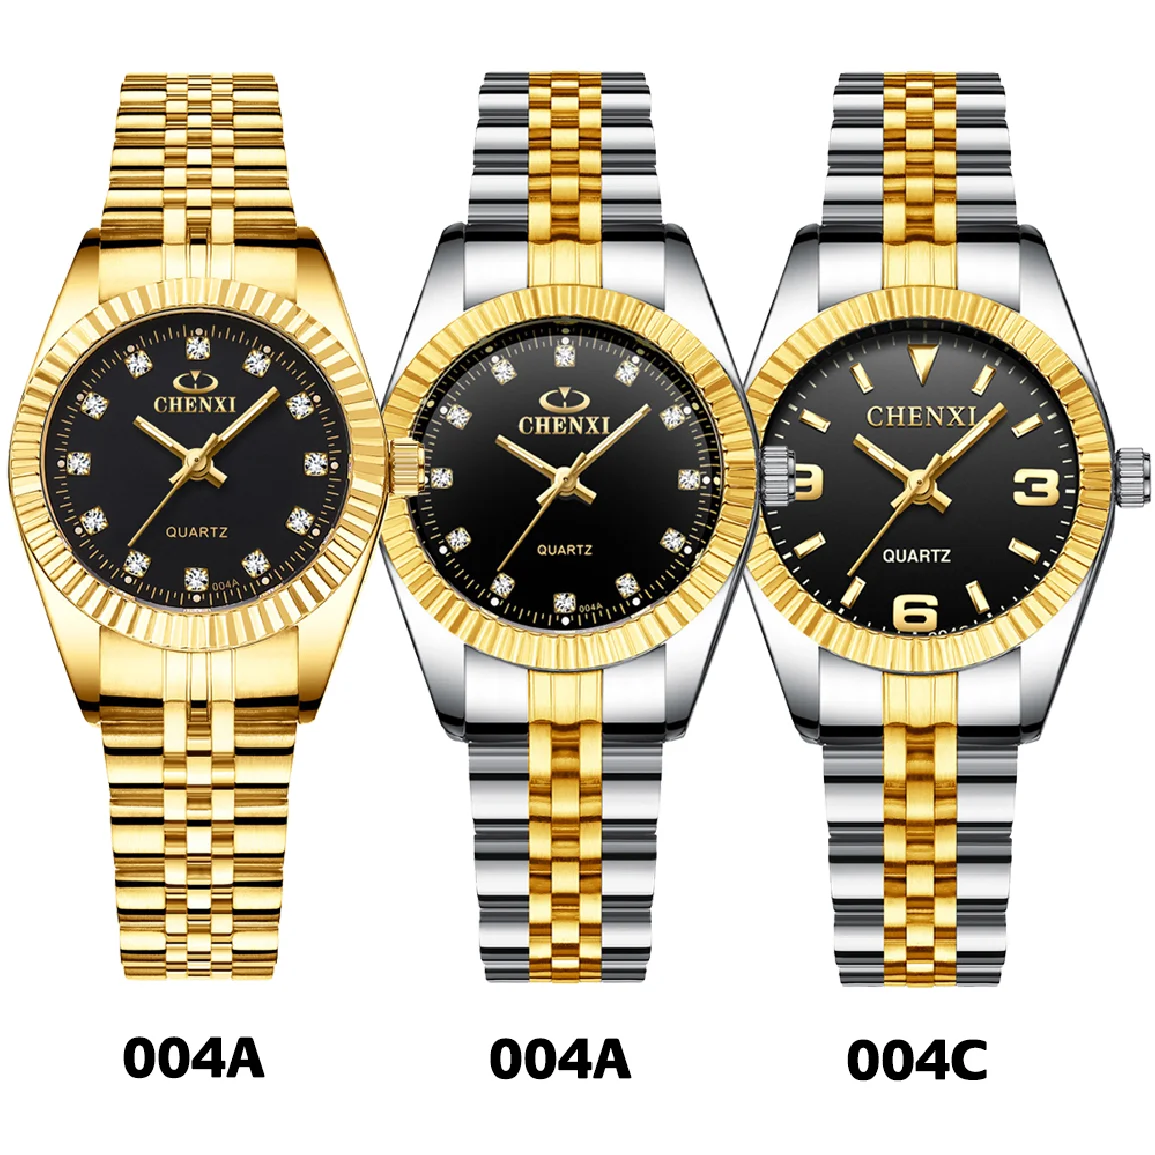 CHENXI Fashion Women Watch Top Luxury Brand Golden Quartz Ladies Elegant Woman Watches Waterproof Small Female Wrist Watch enlarge